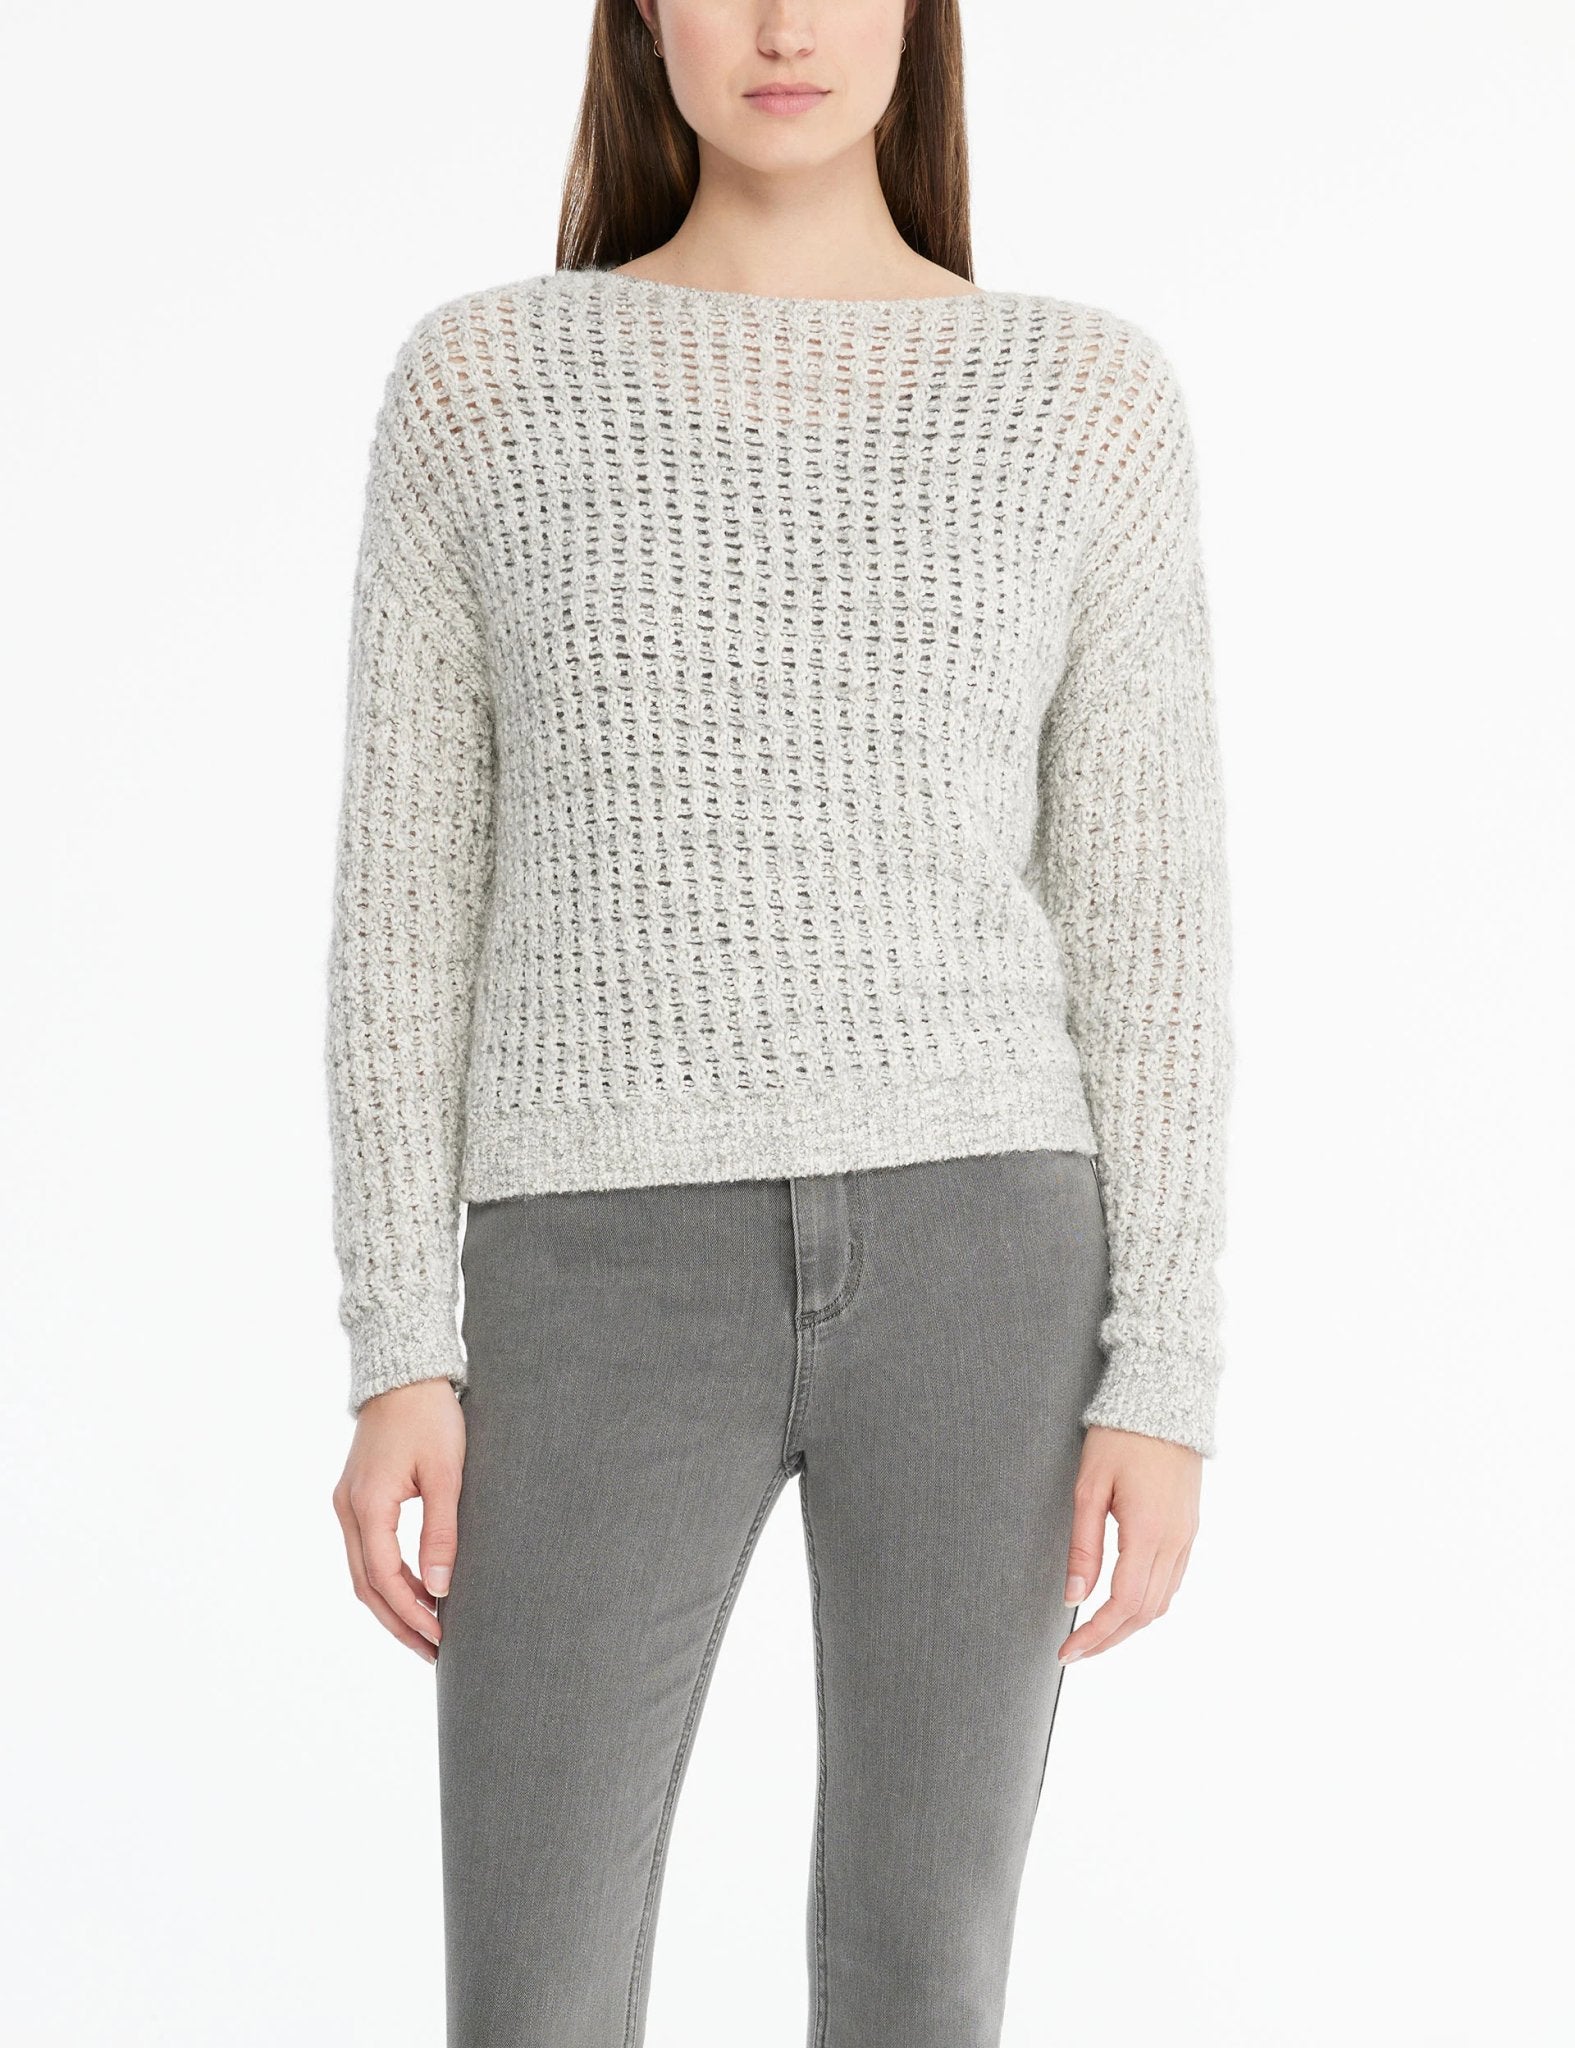 Fishnet Knit Sweater - Sarah Pacini - Danali - Sweater 232.11.114